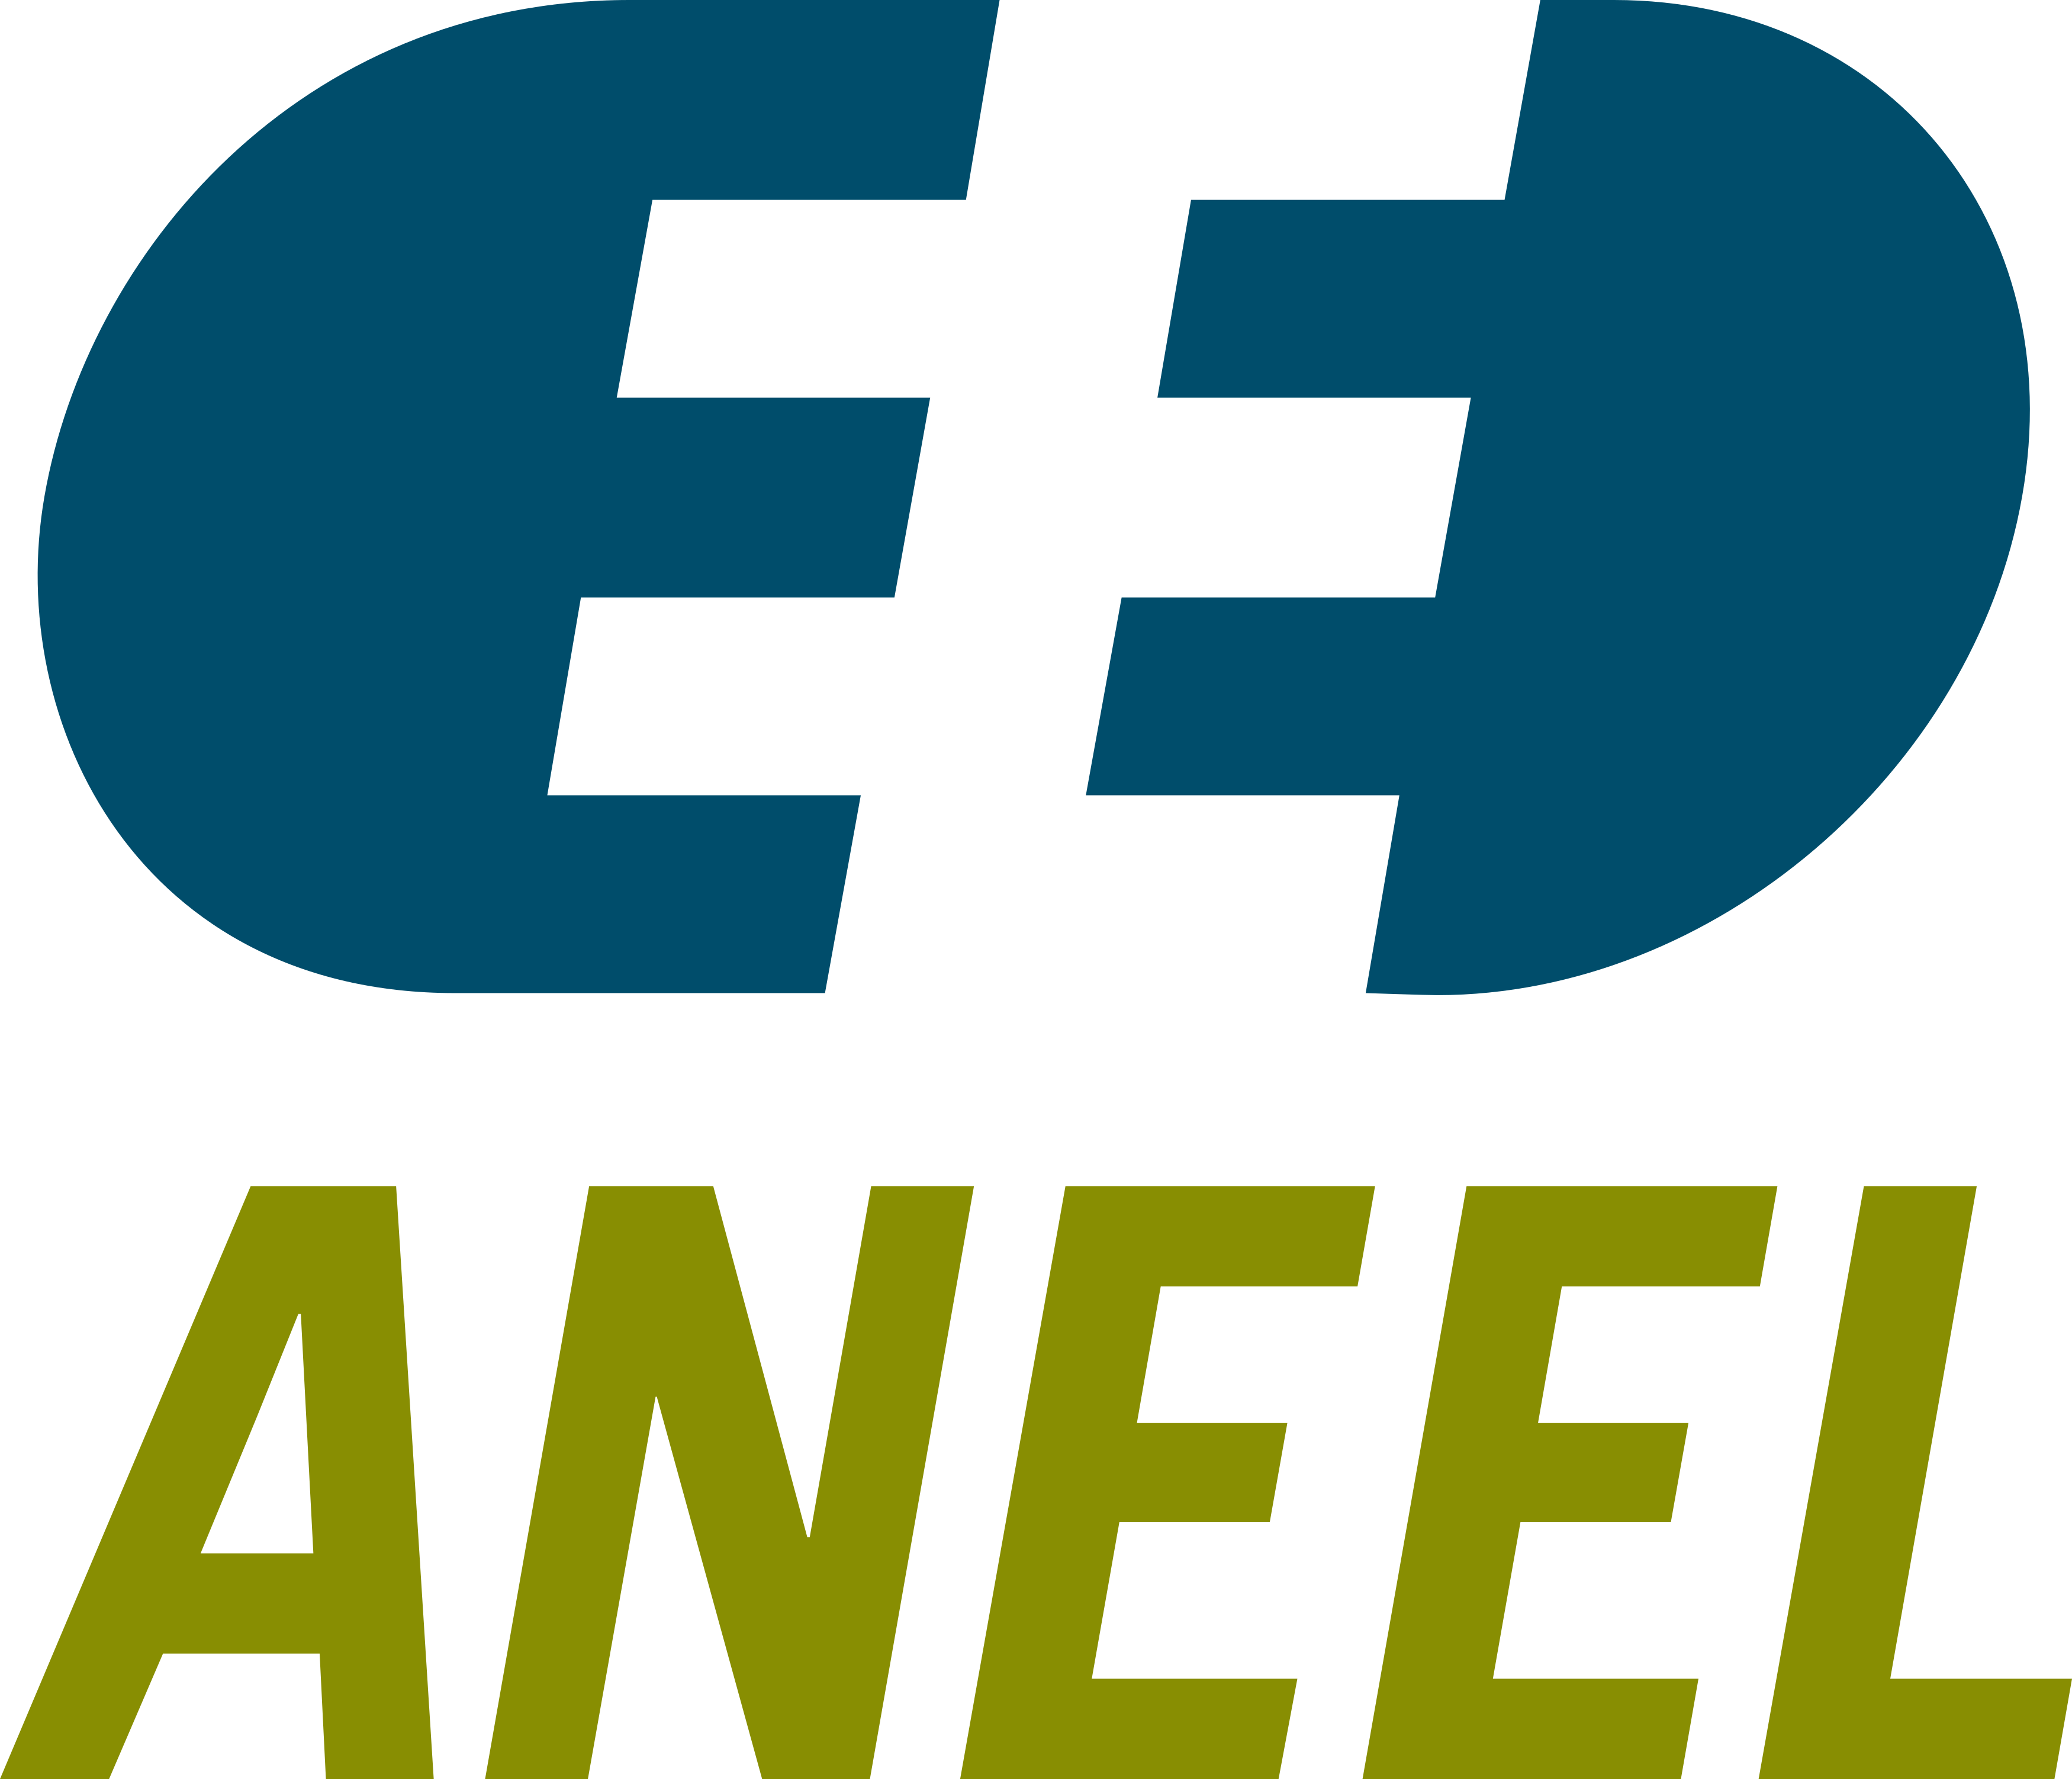 ANEEL Logo.